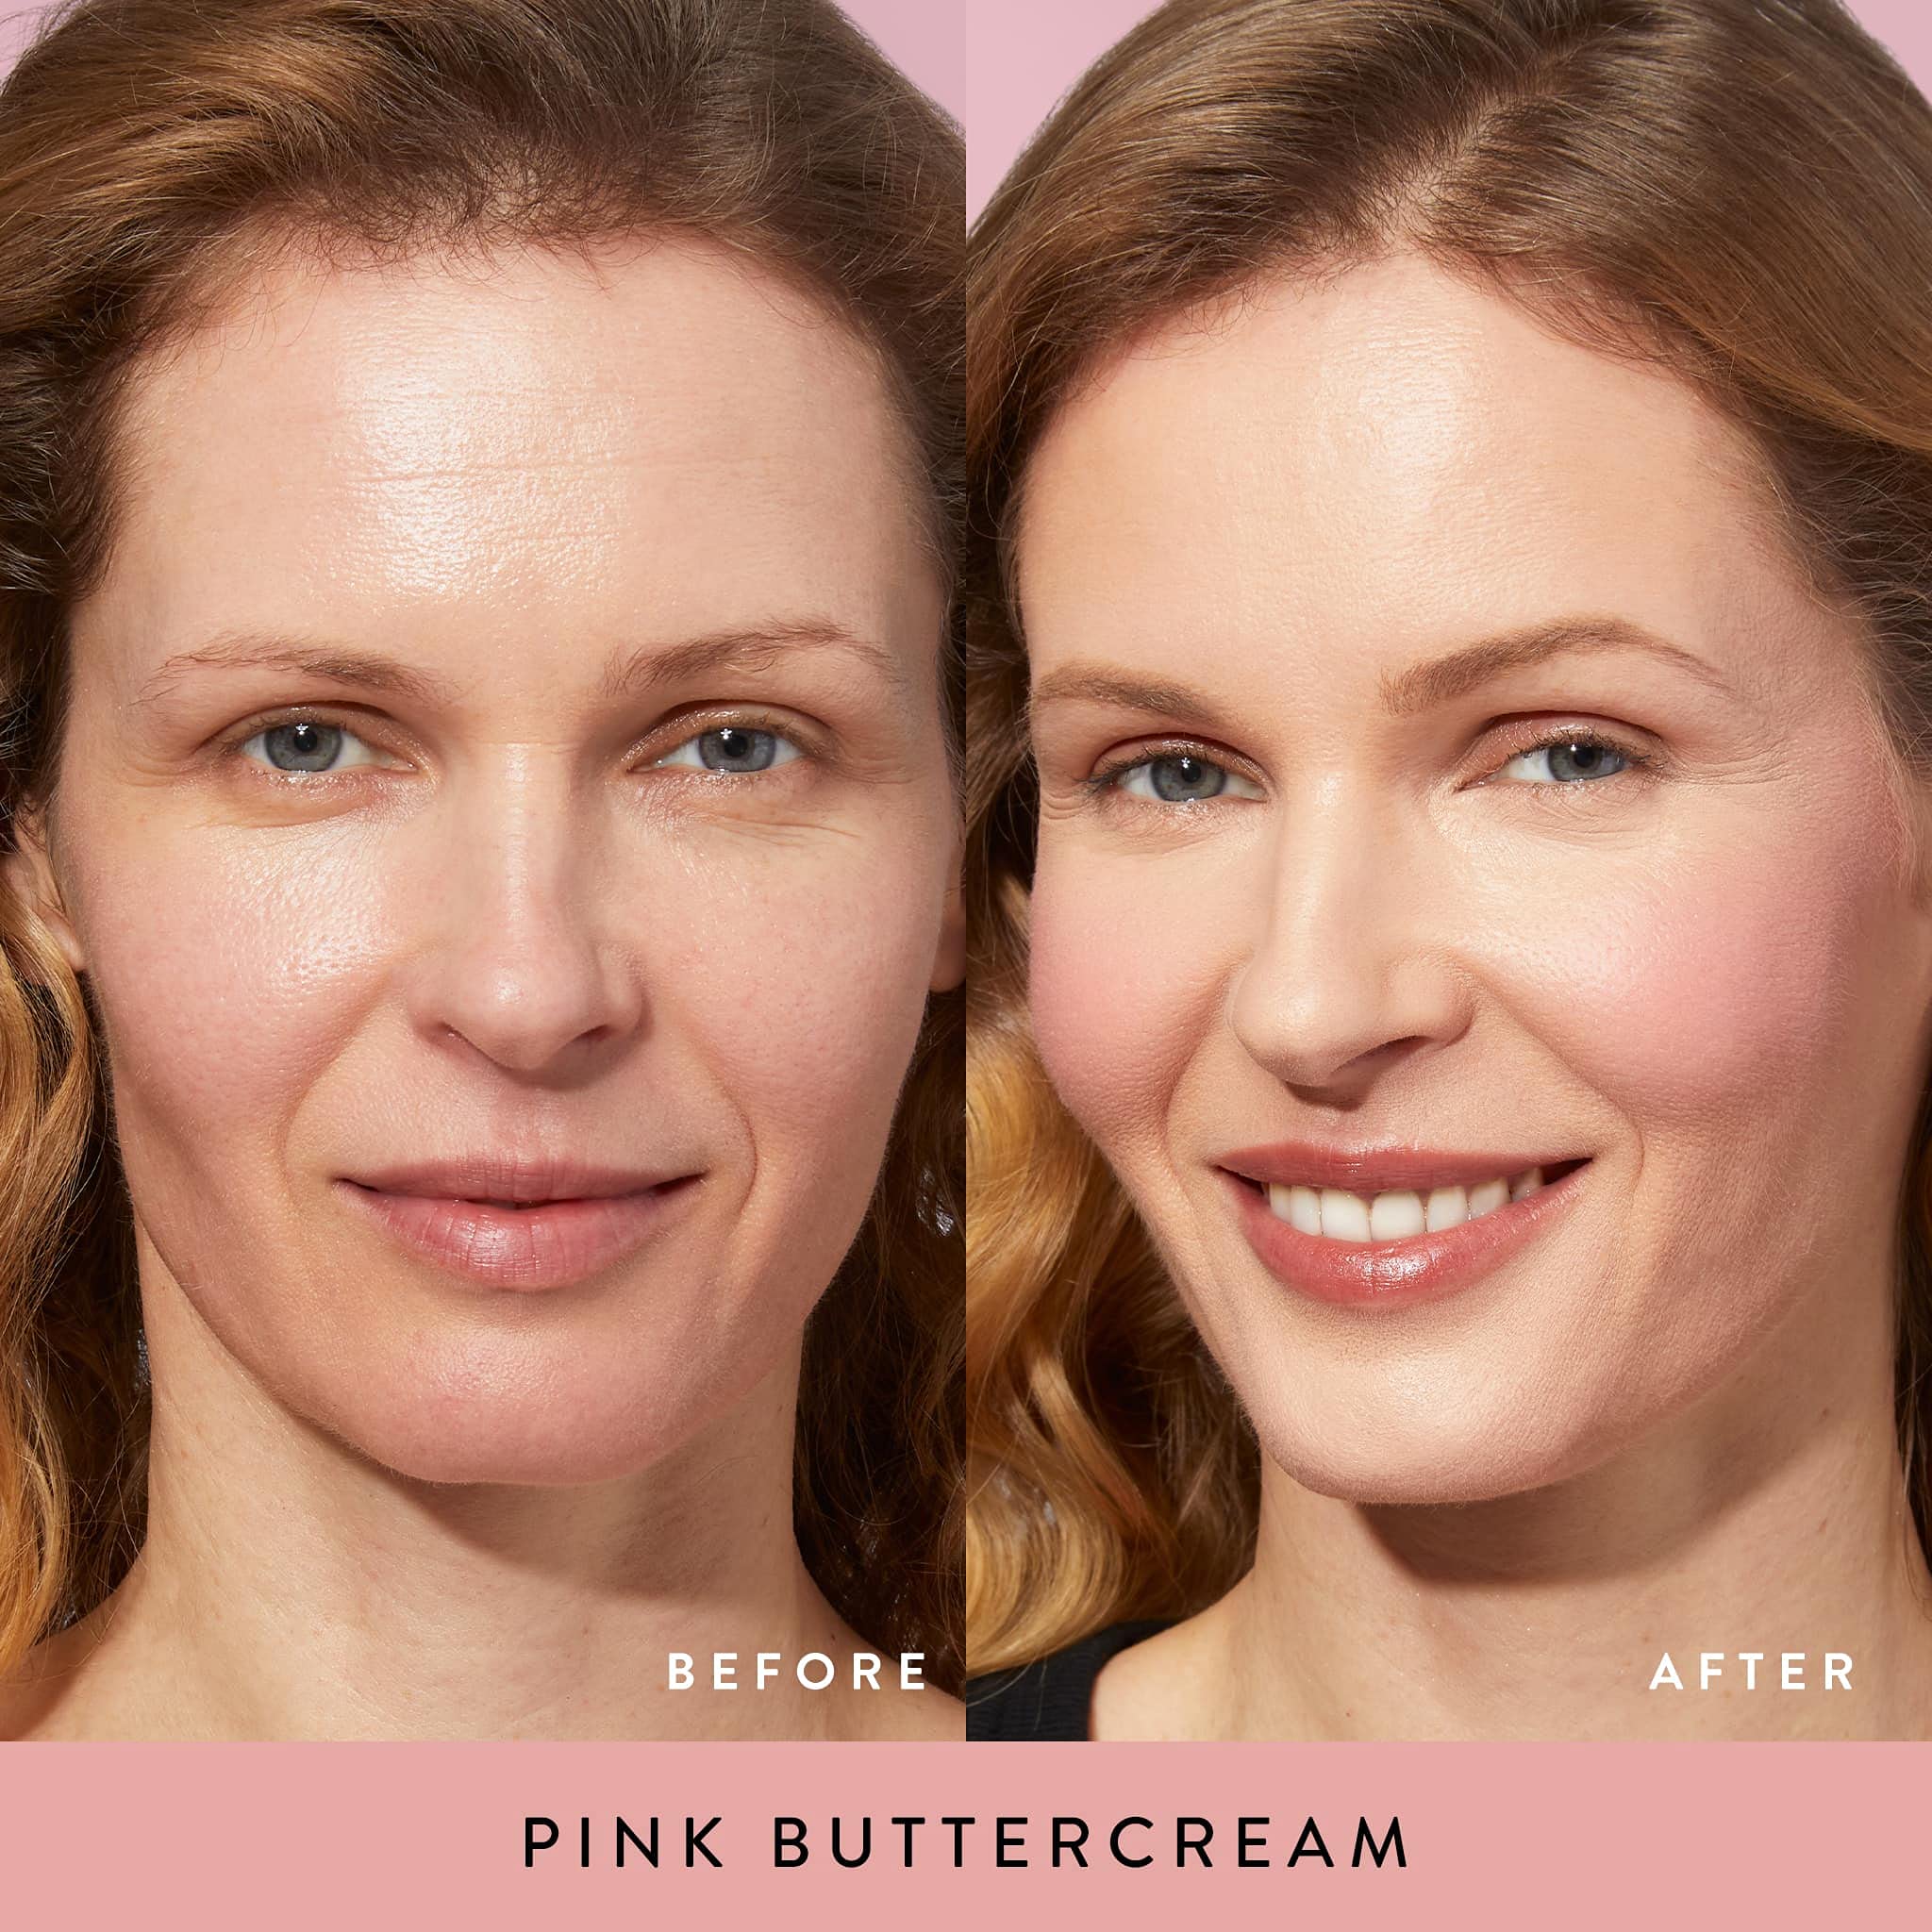 LAURA GELLER NEW YORK Baked Blush-n-Brighten Blush, Pink Buttercream + Modern Classic Cream Lipstick, Pink Passion